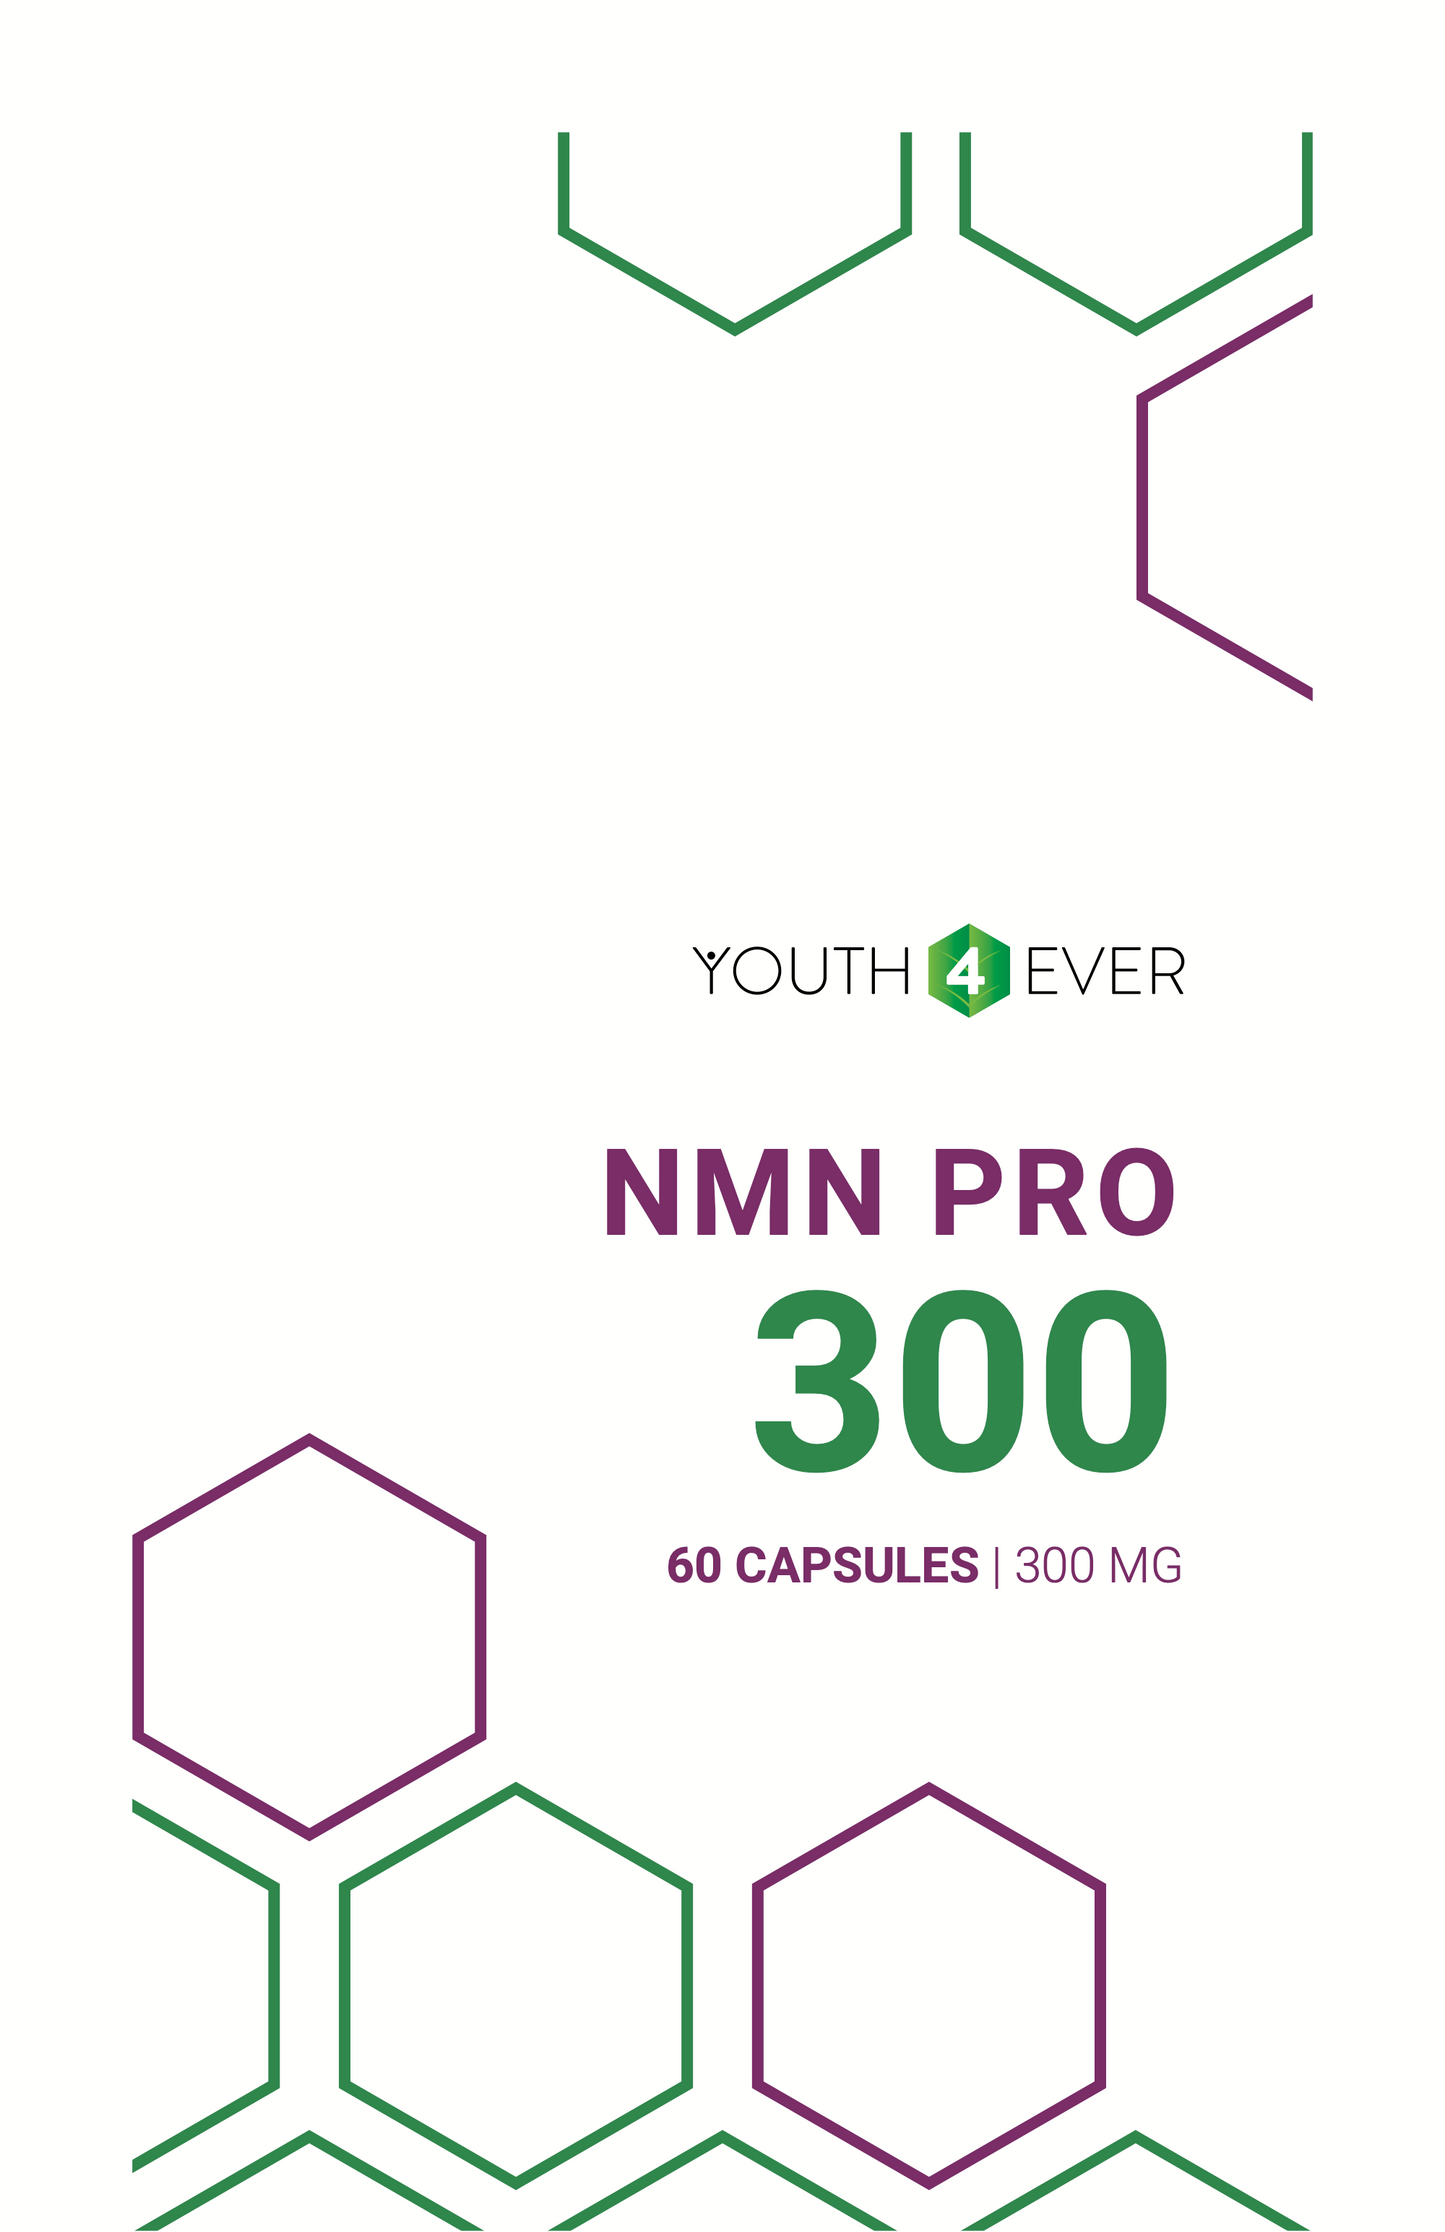 NMN PRO 300 - 54 Gramm NMN - 99 % rein - 180 Kapseln